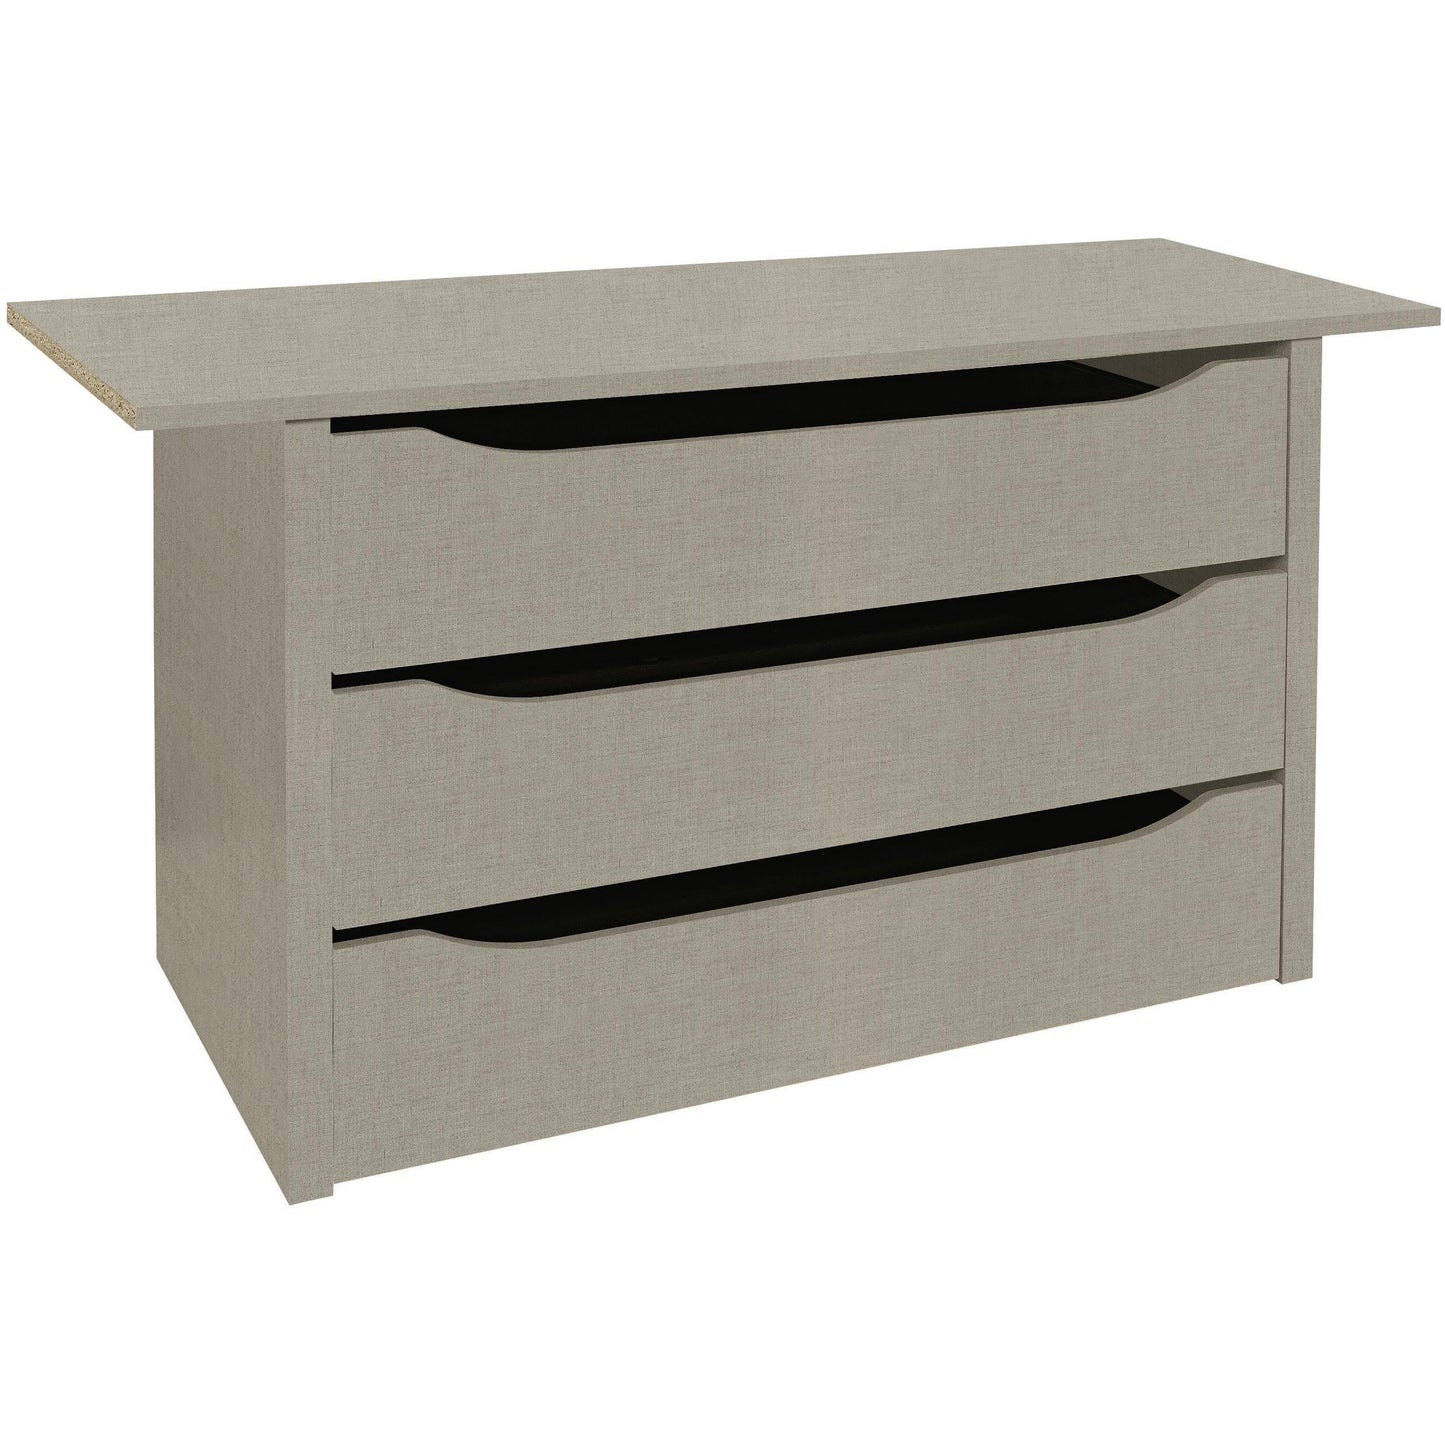 Rauch Alegro internal drawer unit 112cm